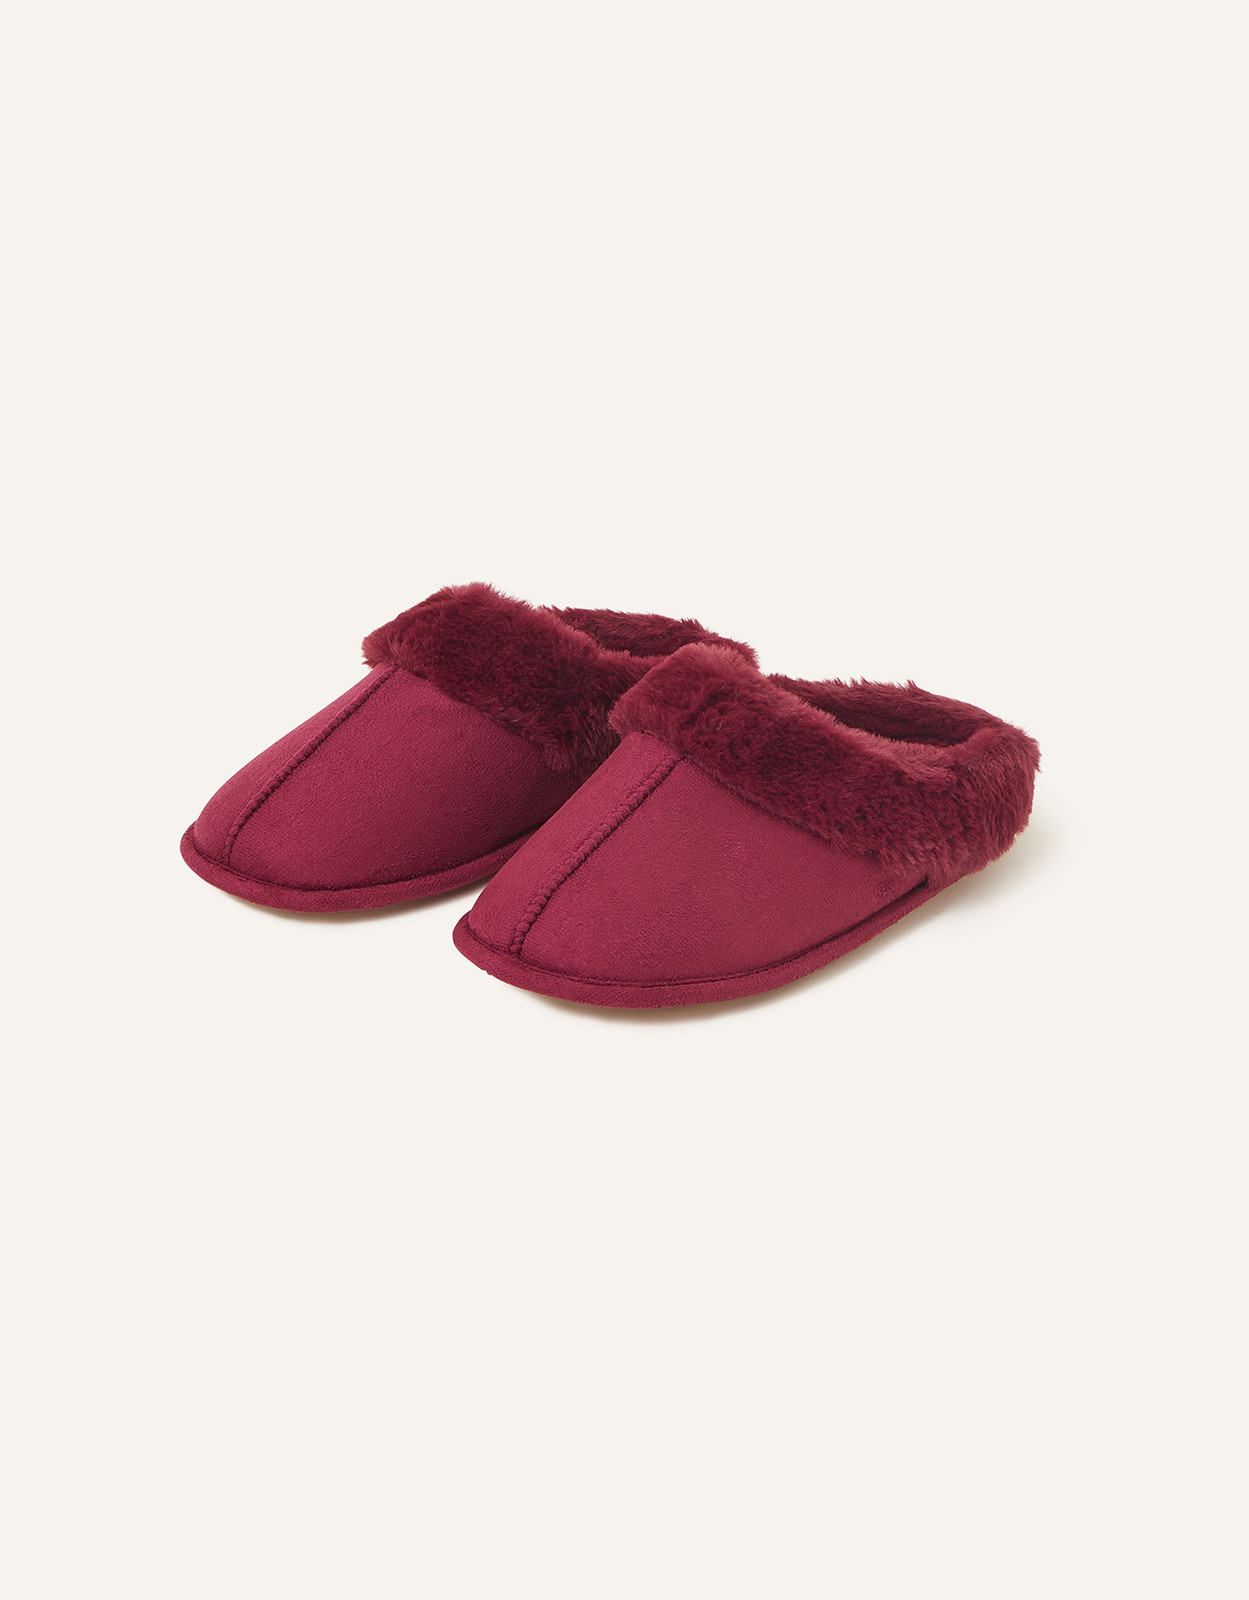 Accessorize Women's Faux Fur Mule Slippers Red, Size: L